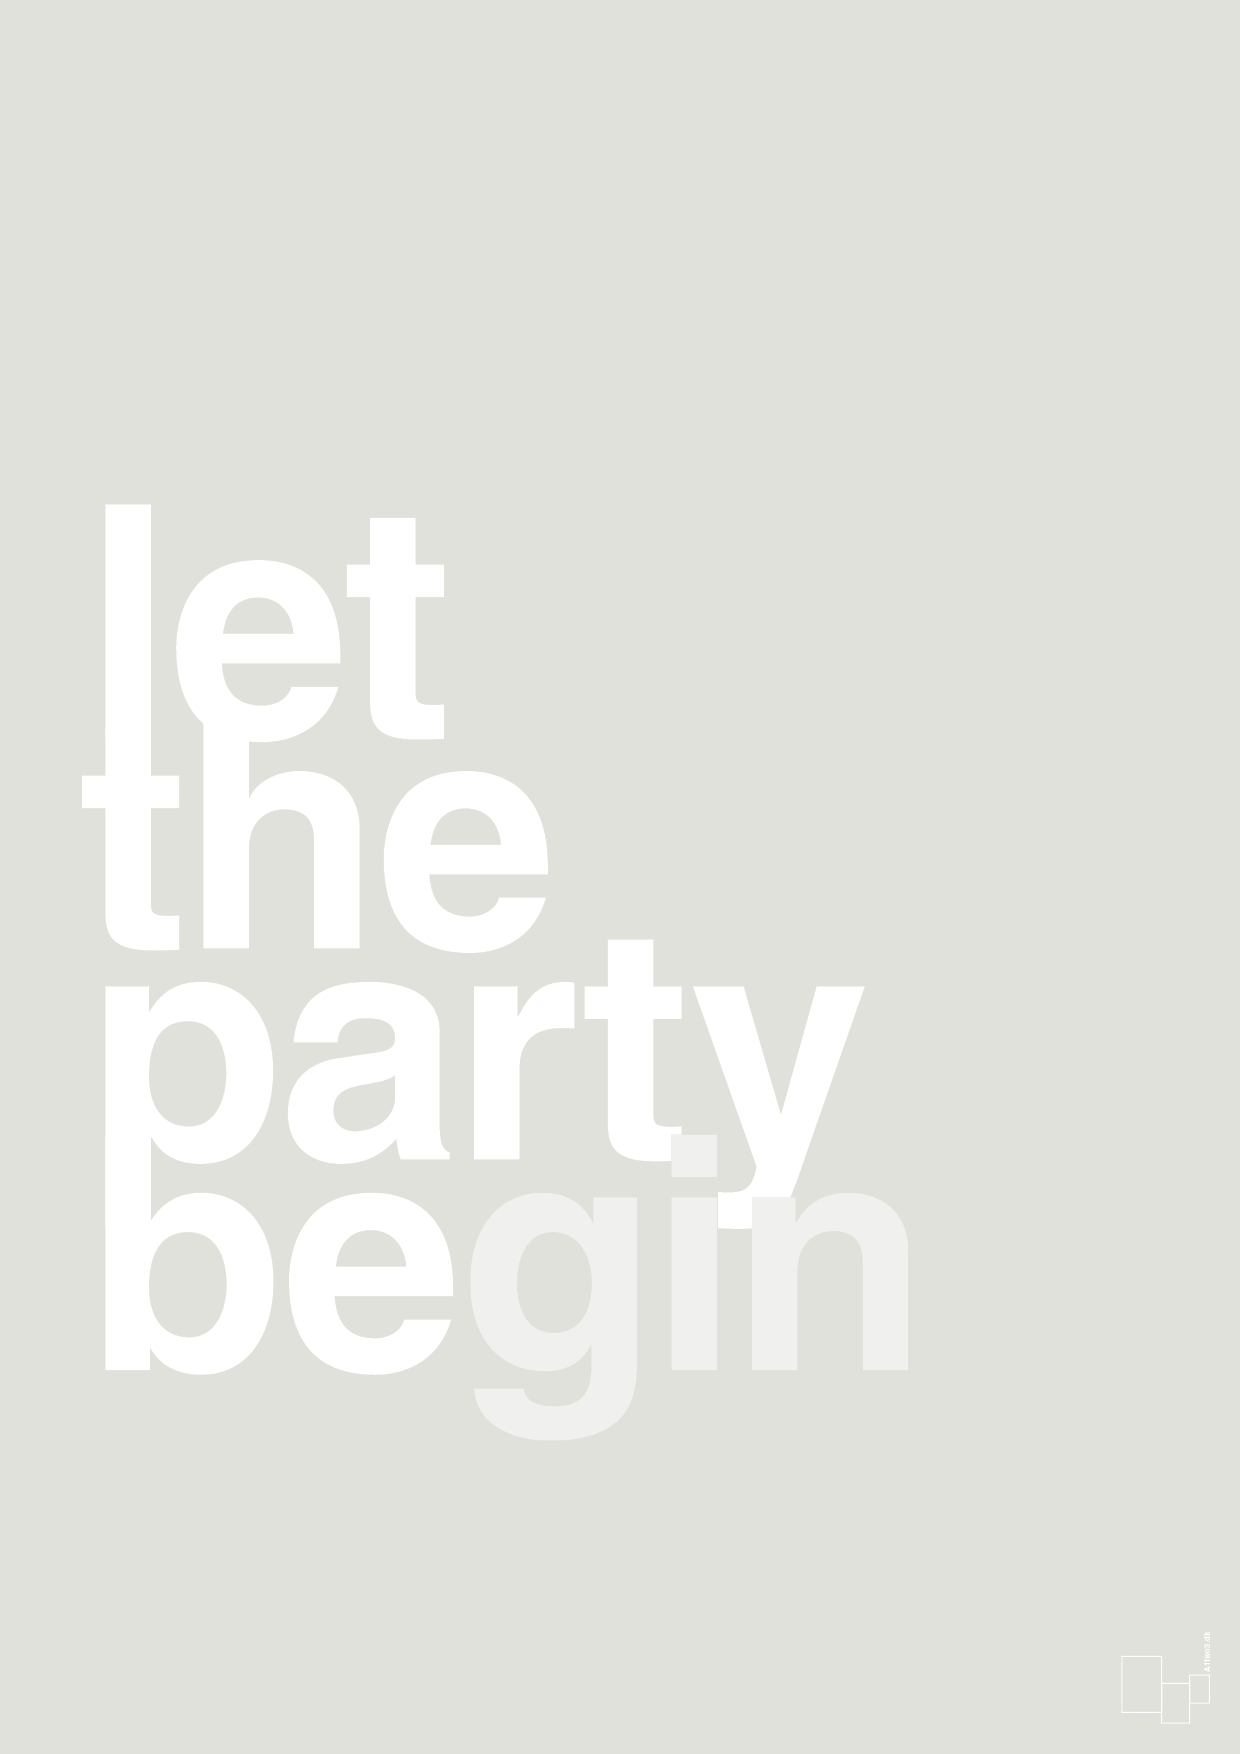 let the party begin - Plakat med Ordsprog i Painters White